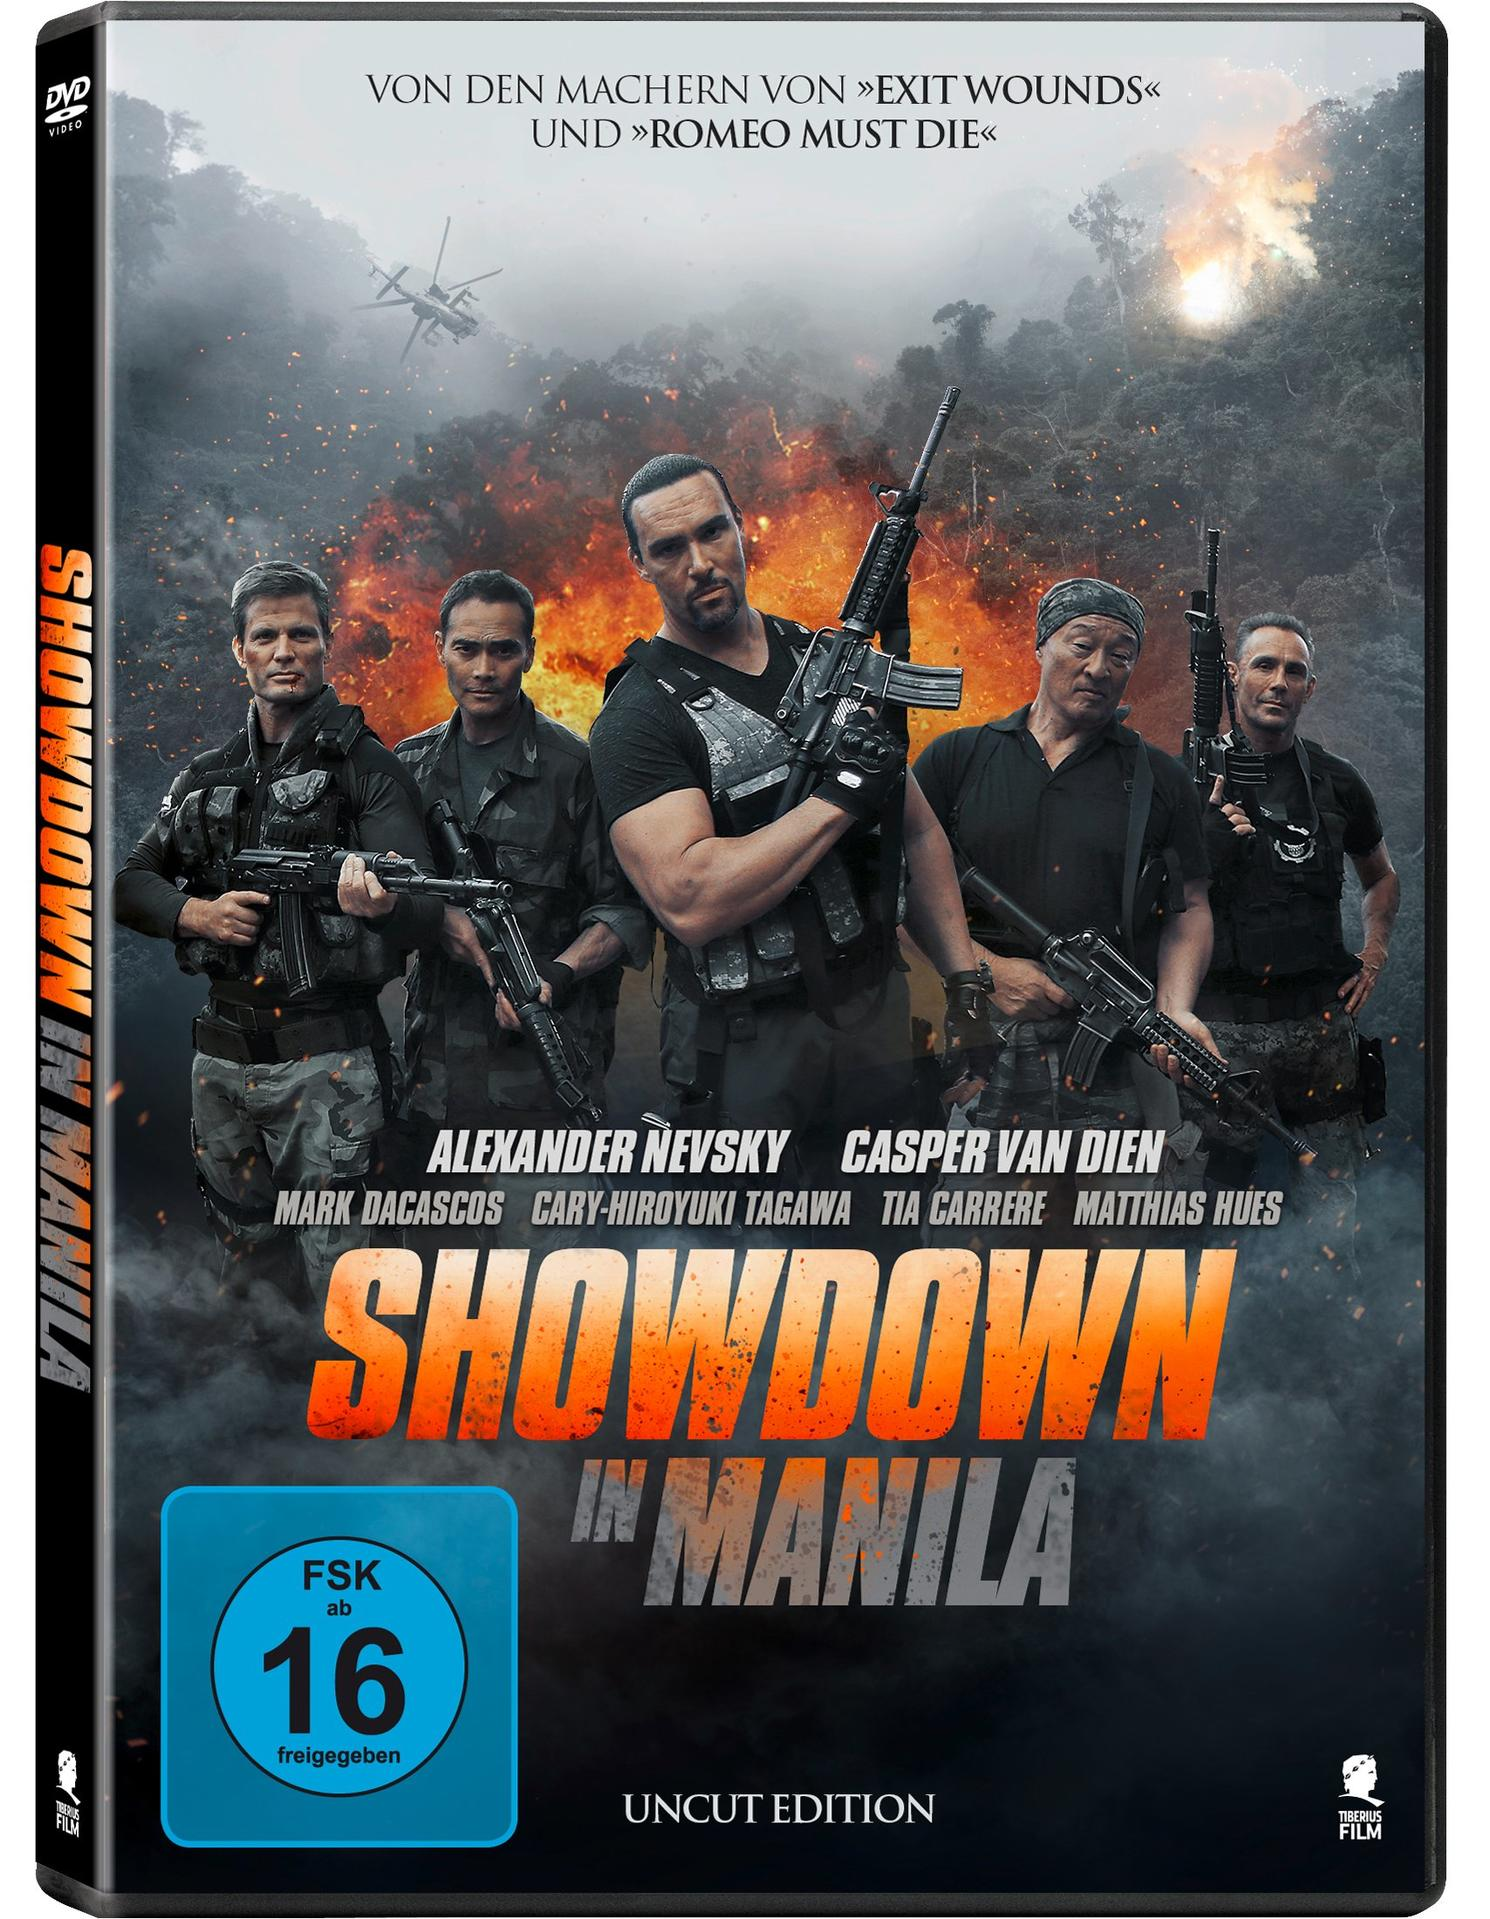 MANILA SHOWDOWN DVD IN